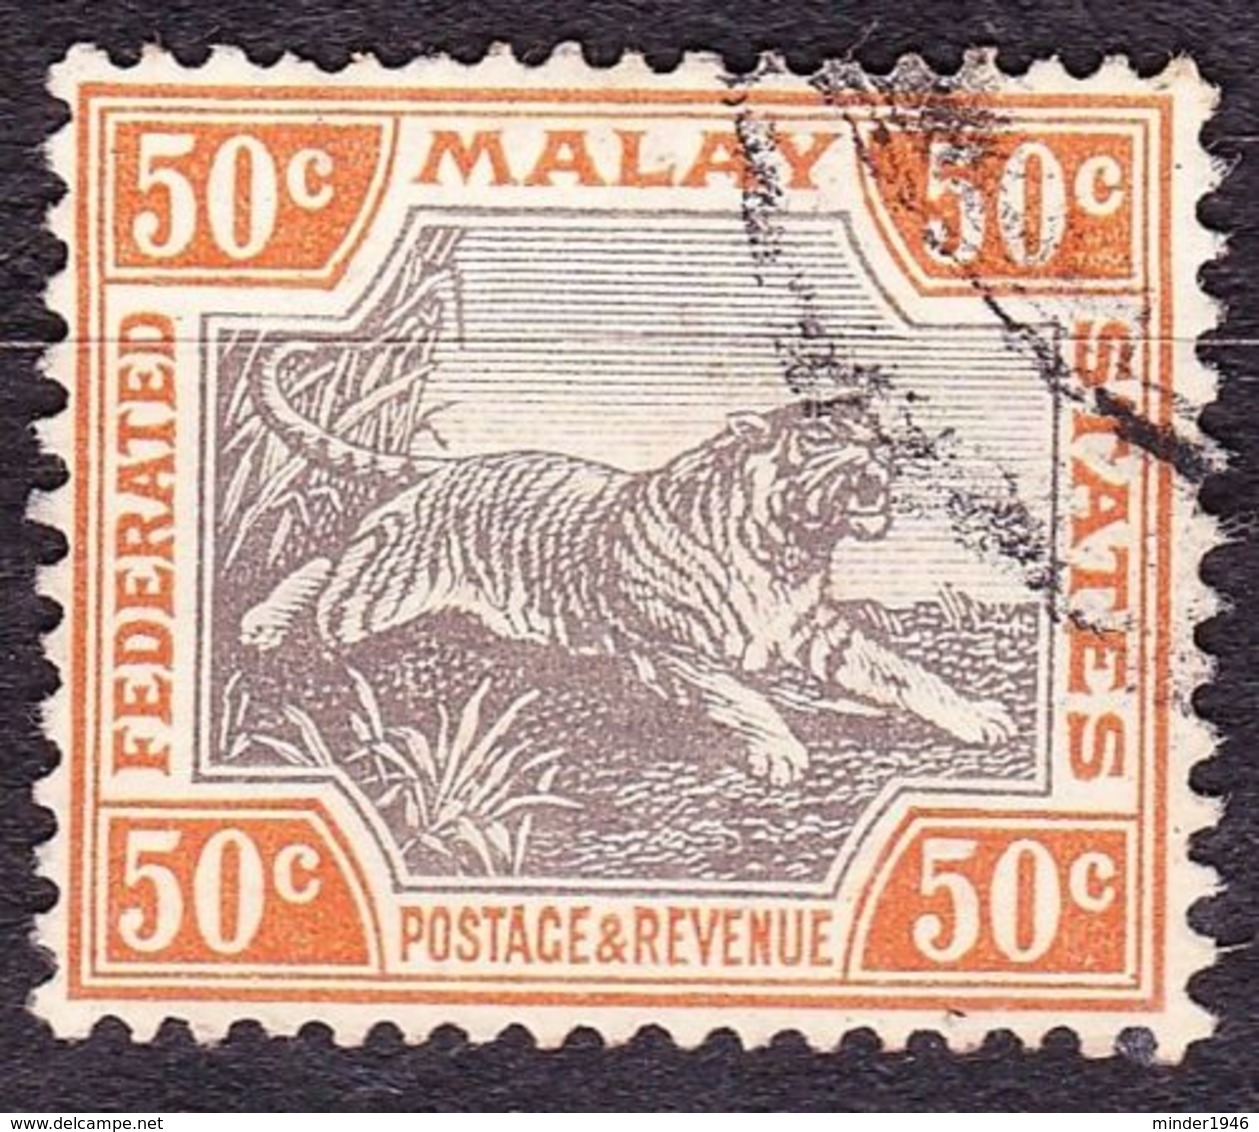 MALAYA 1900 50 Cents Grey & Orange-Brown SG22a Used - Malayan Postal Union